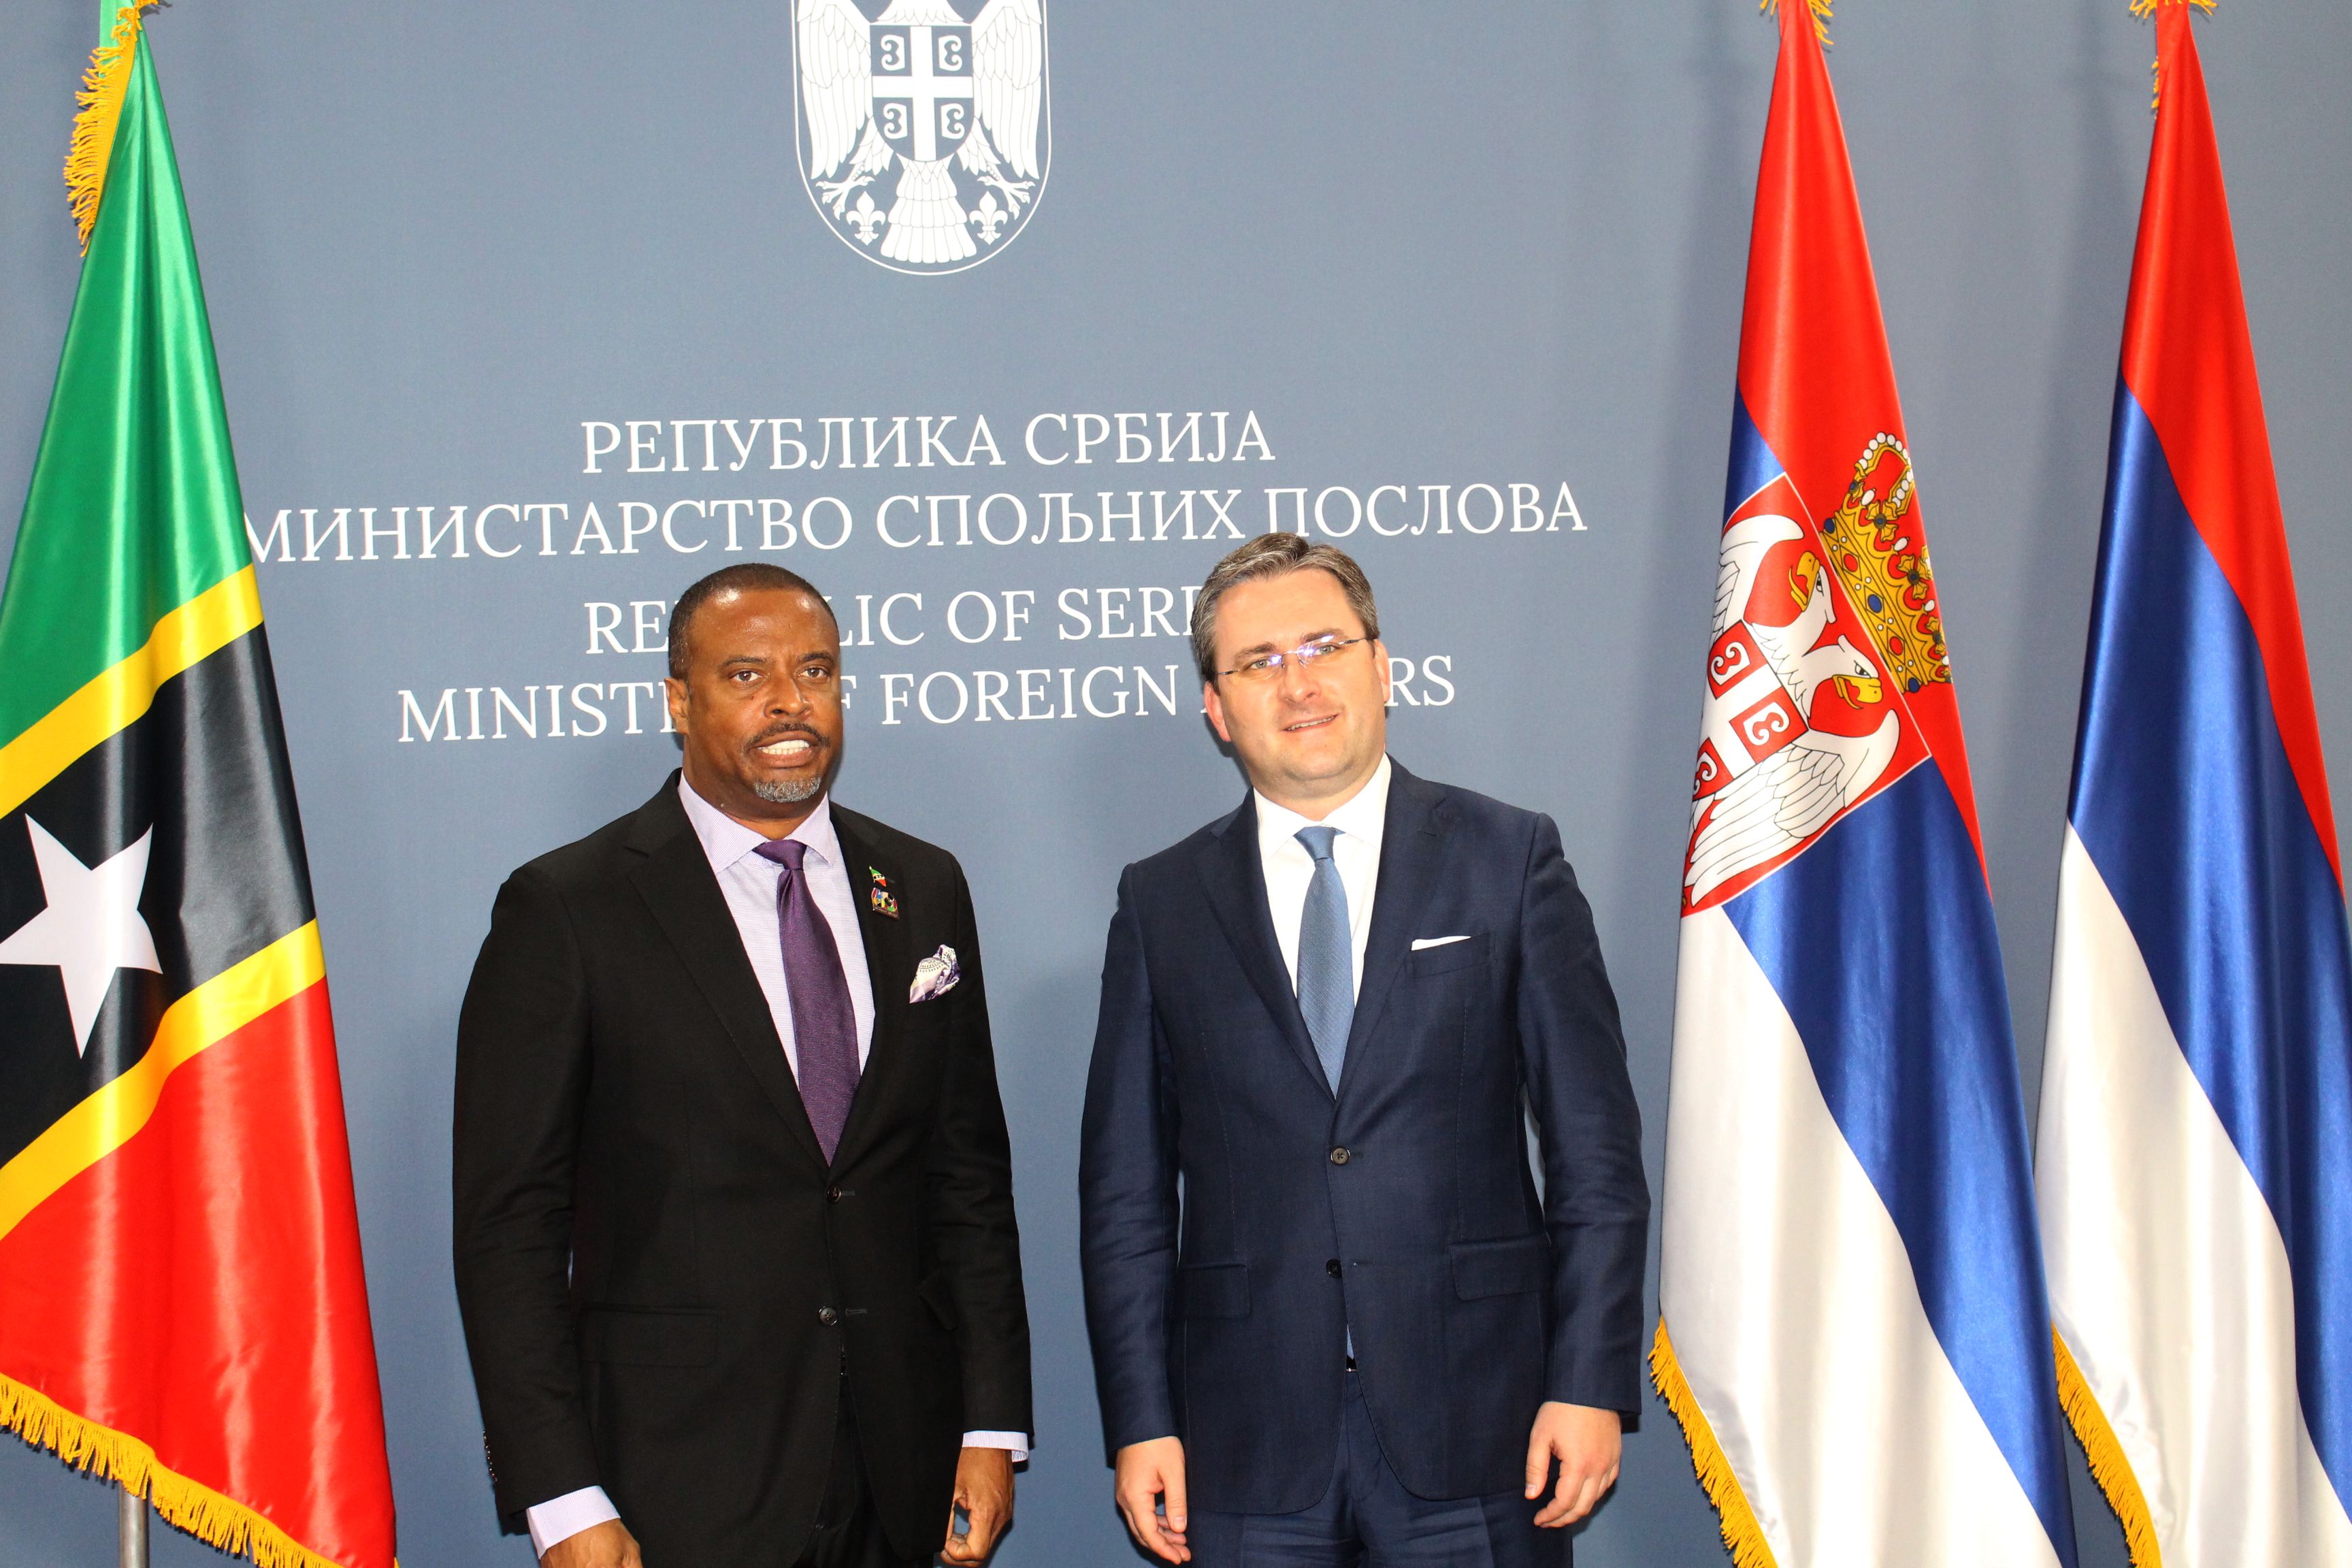 Serbian Ambassador to US discusses relations, visa liberalisation